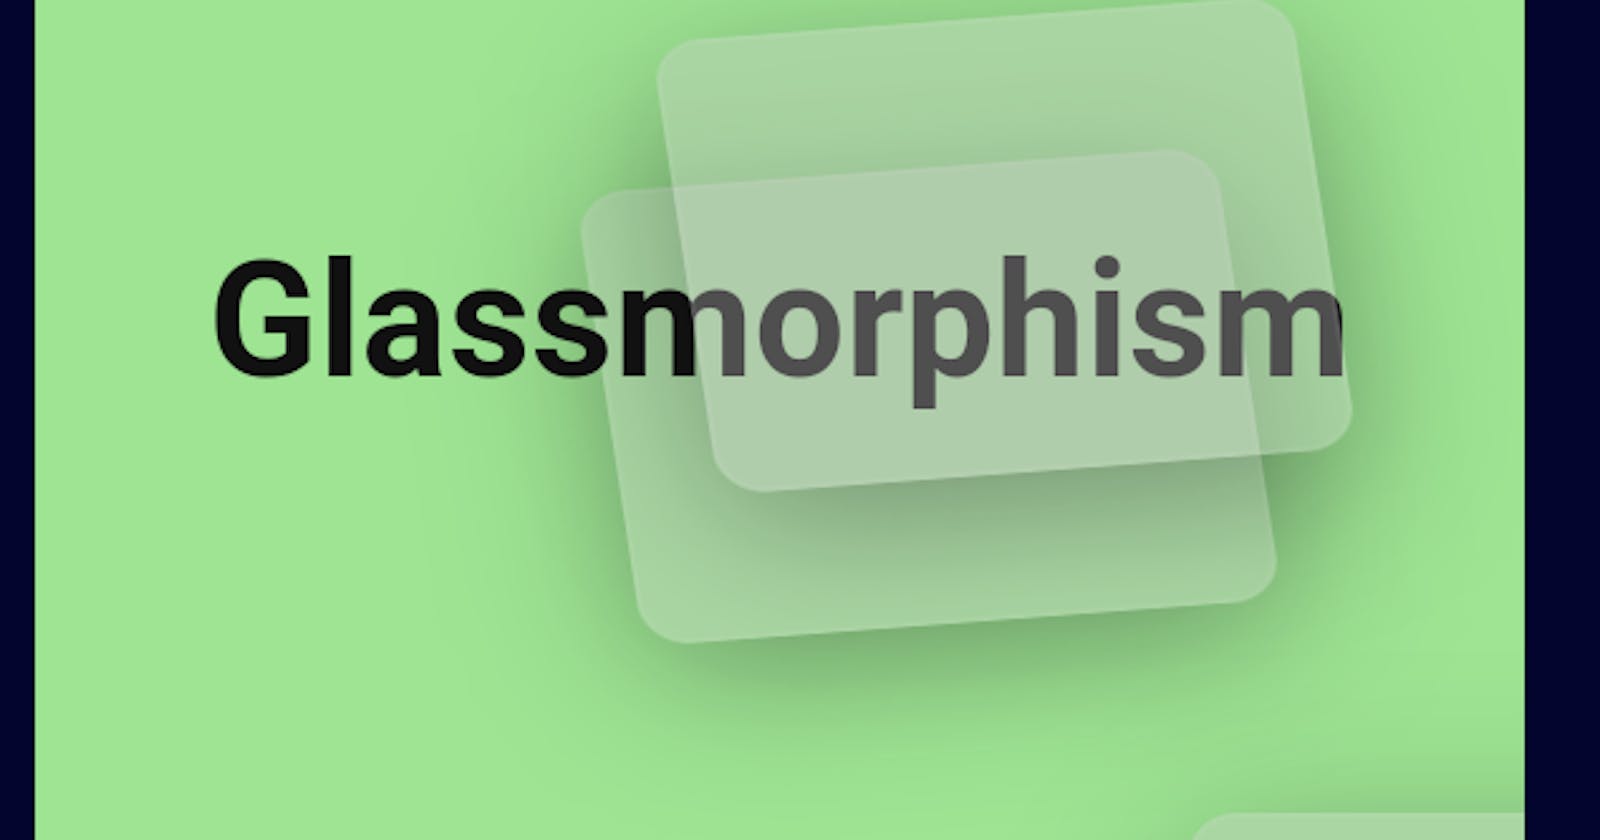 Glassmorphism Generator - Get glassmorphism snippets in seconds